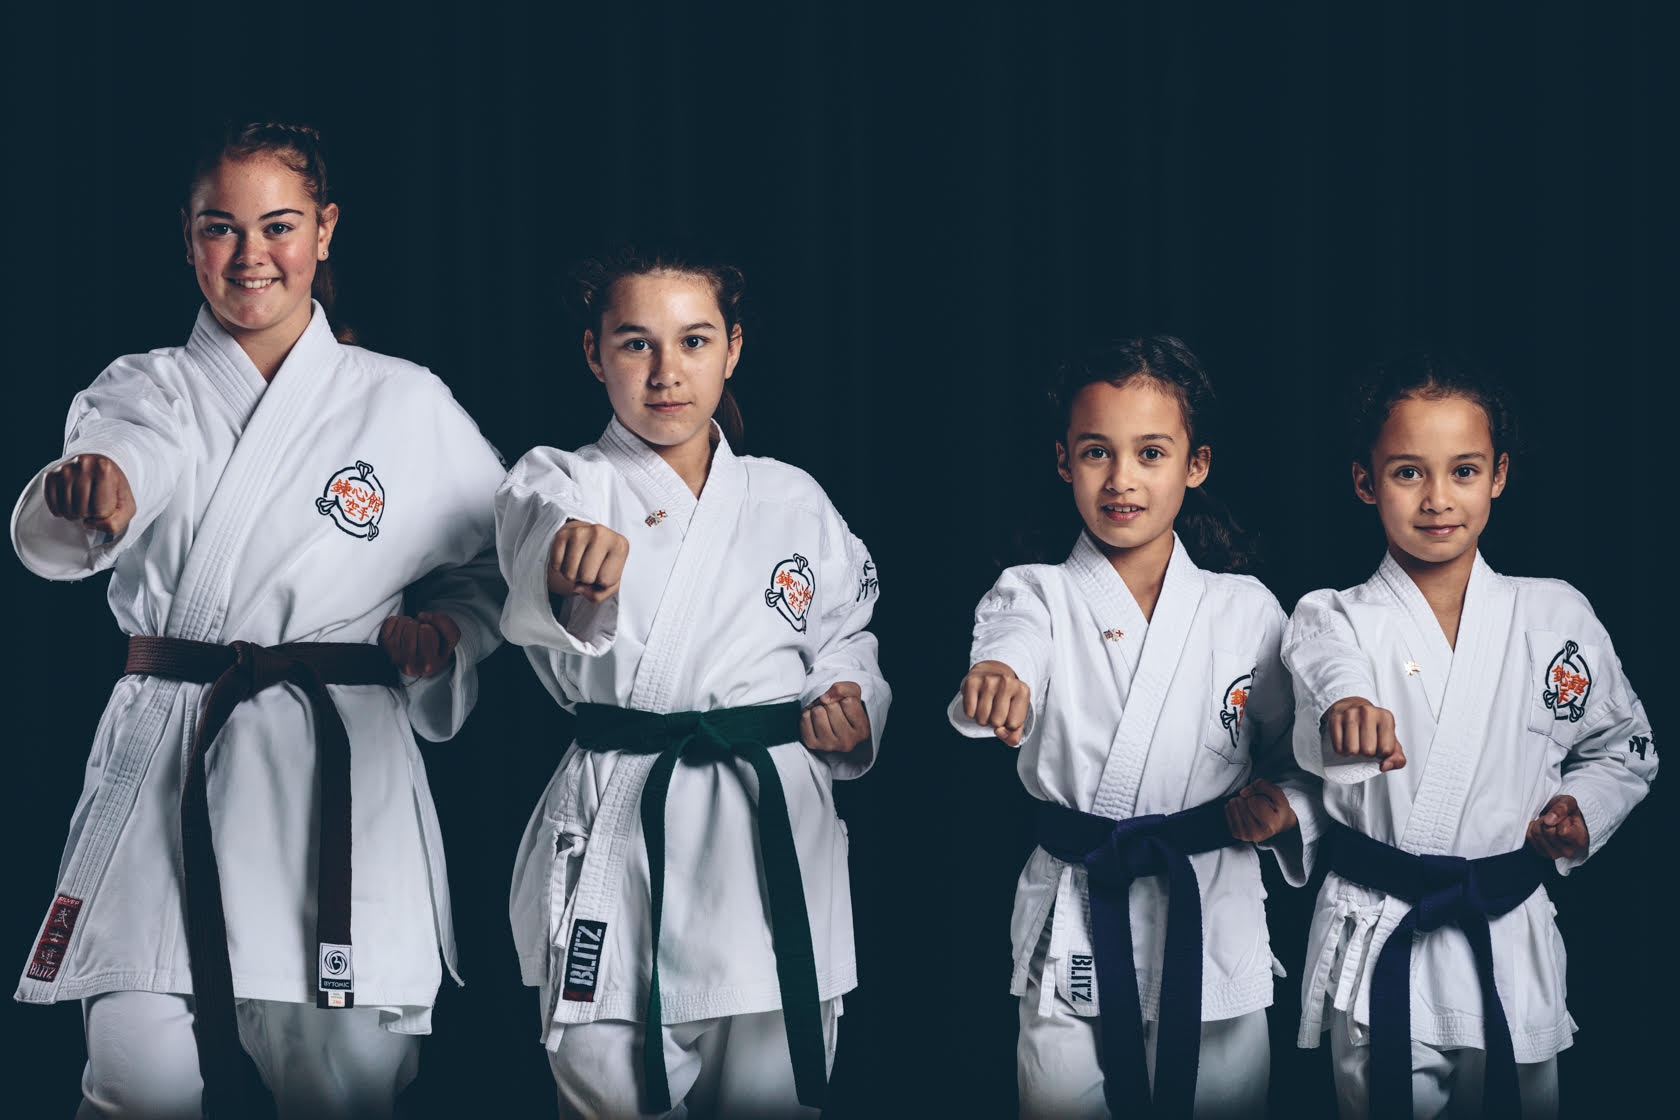 Karate girls in GB squad 2017